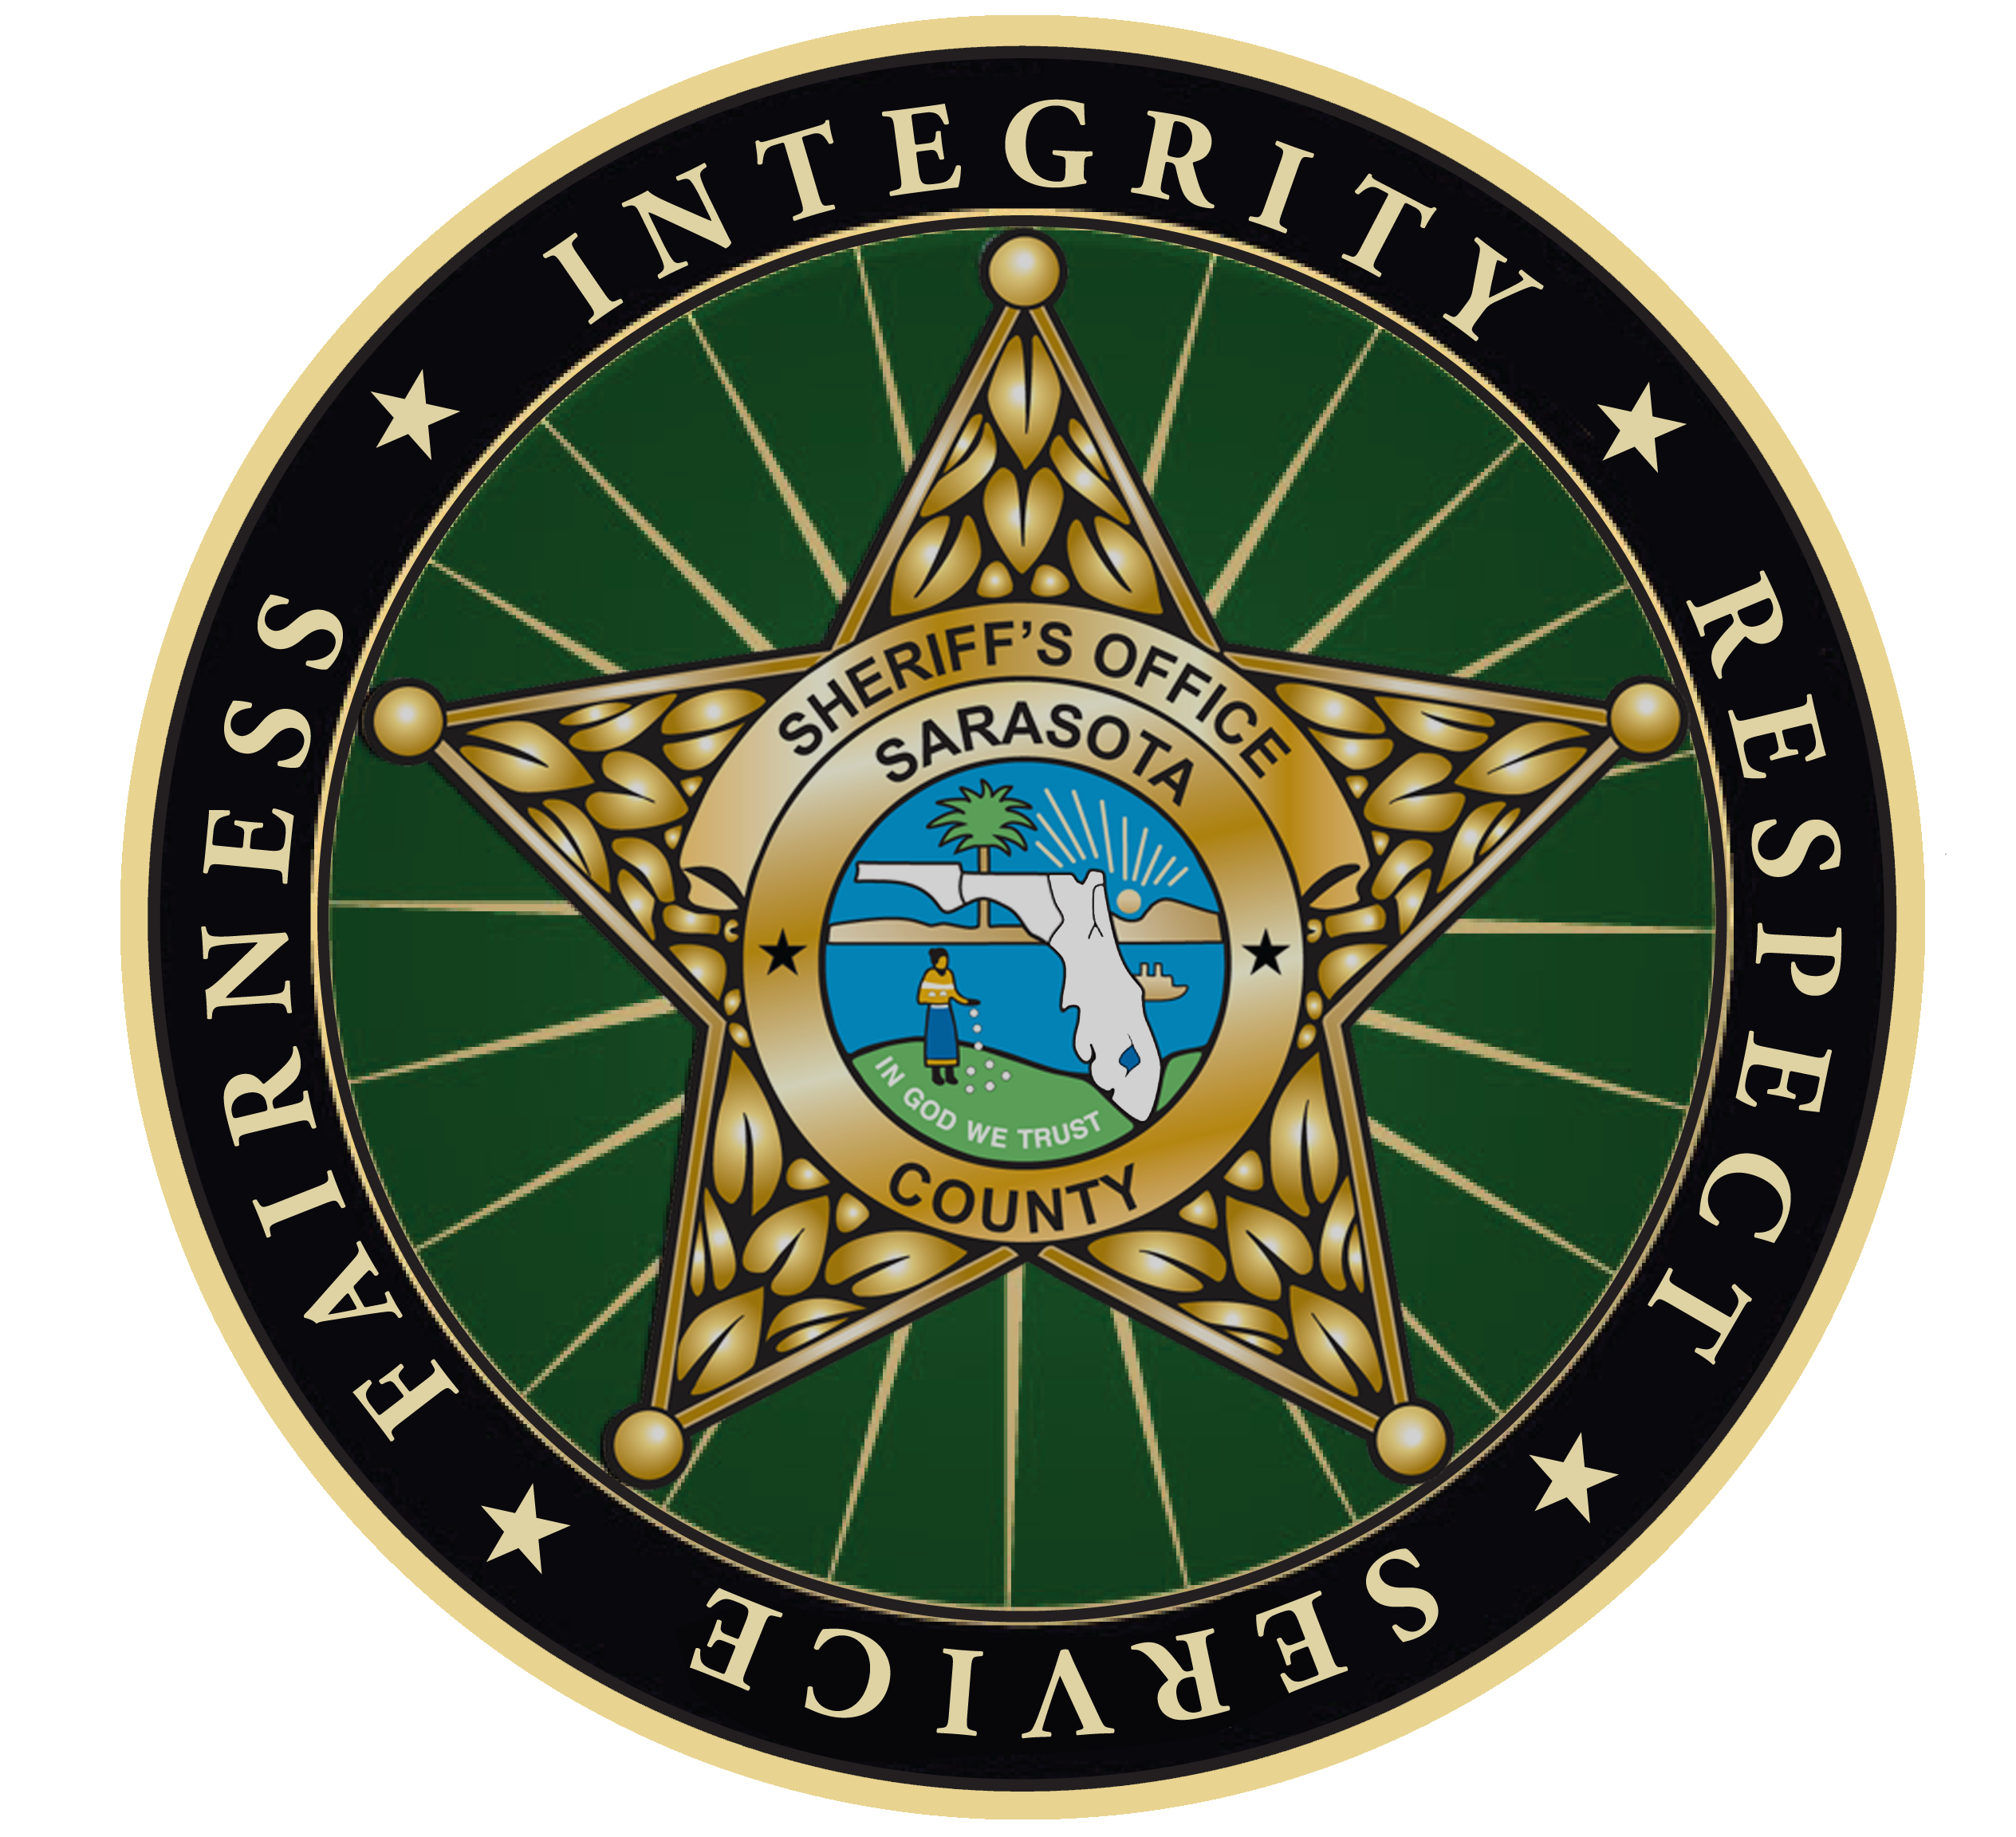 Organization logo of Sarasota County Sheriff's Office